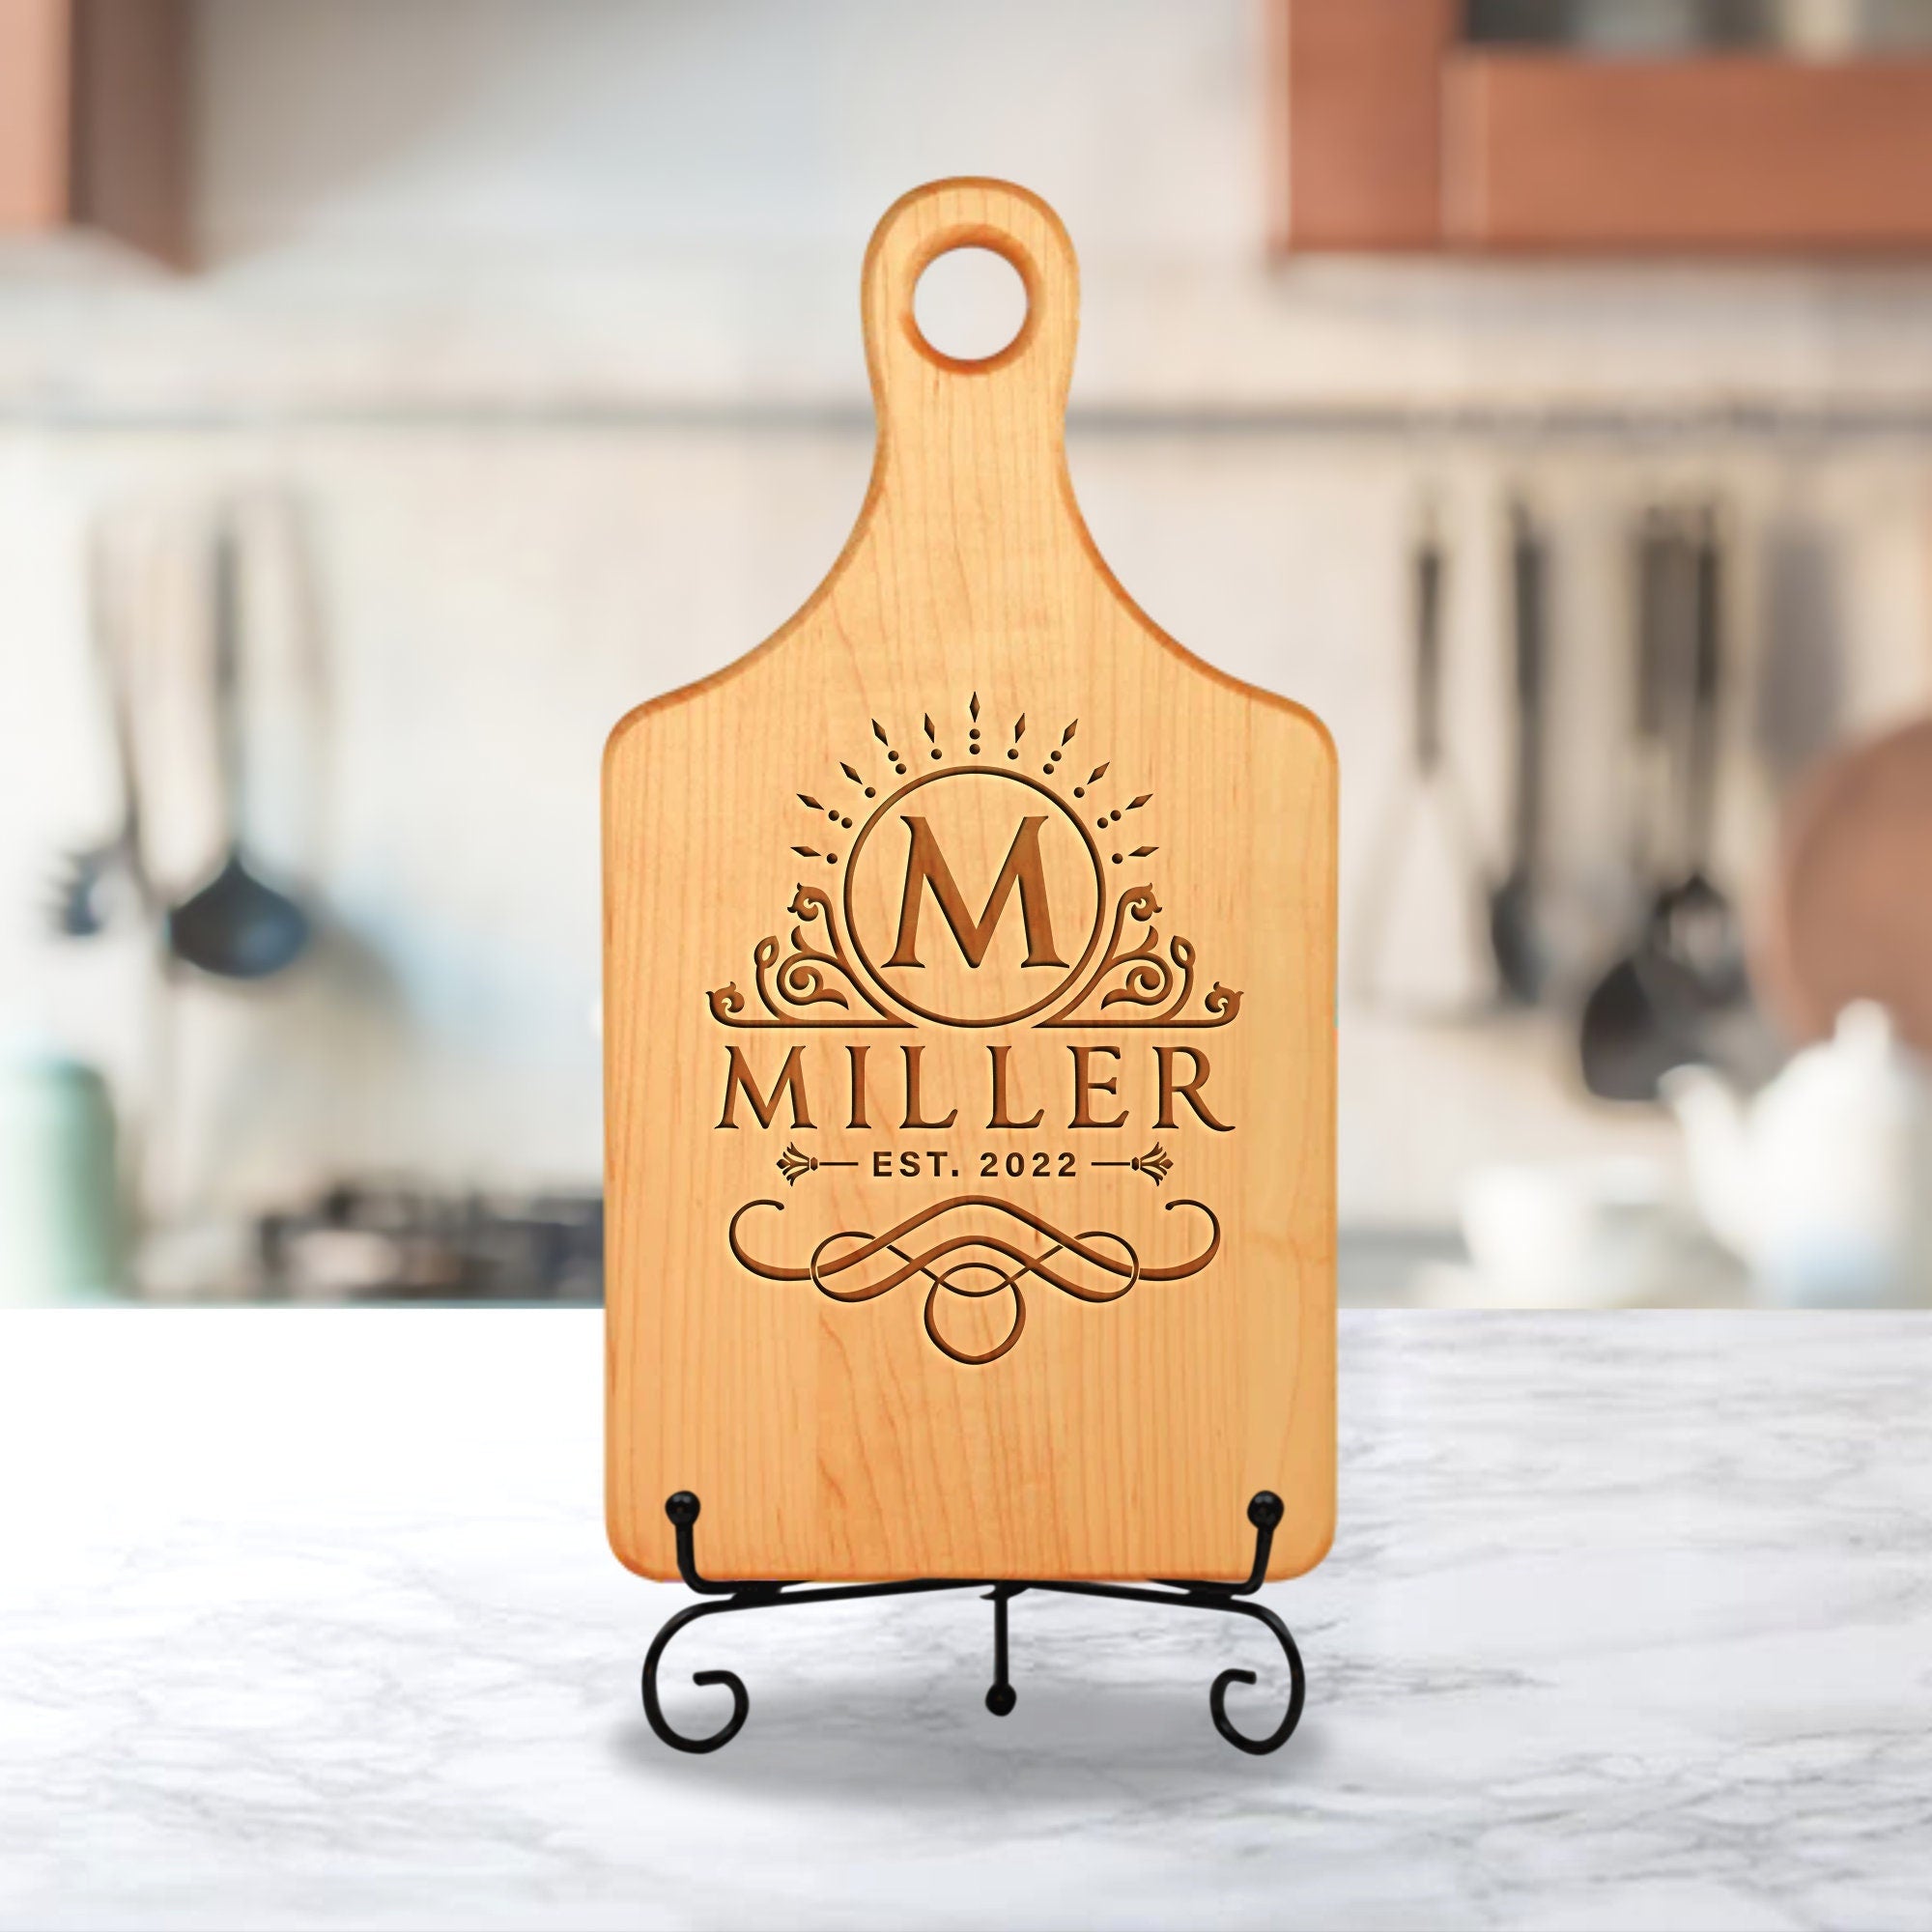 Personalized Cutting board, Paddle-shaped, housewarming gift